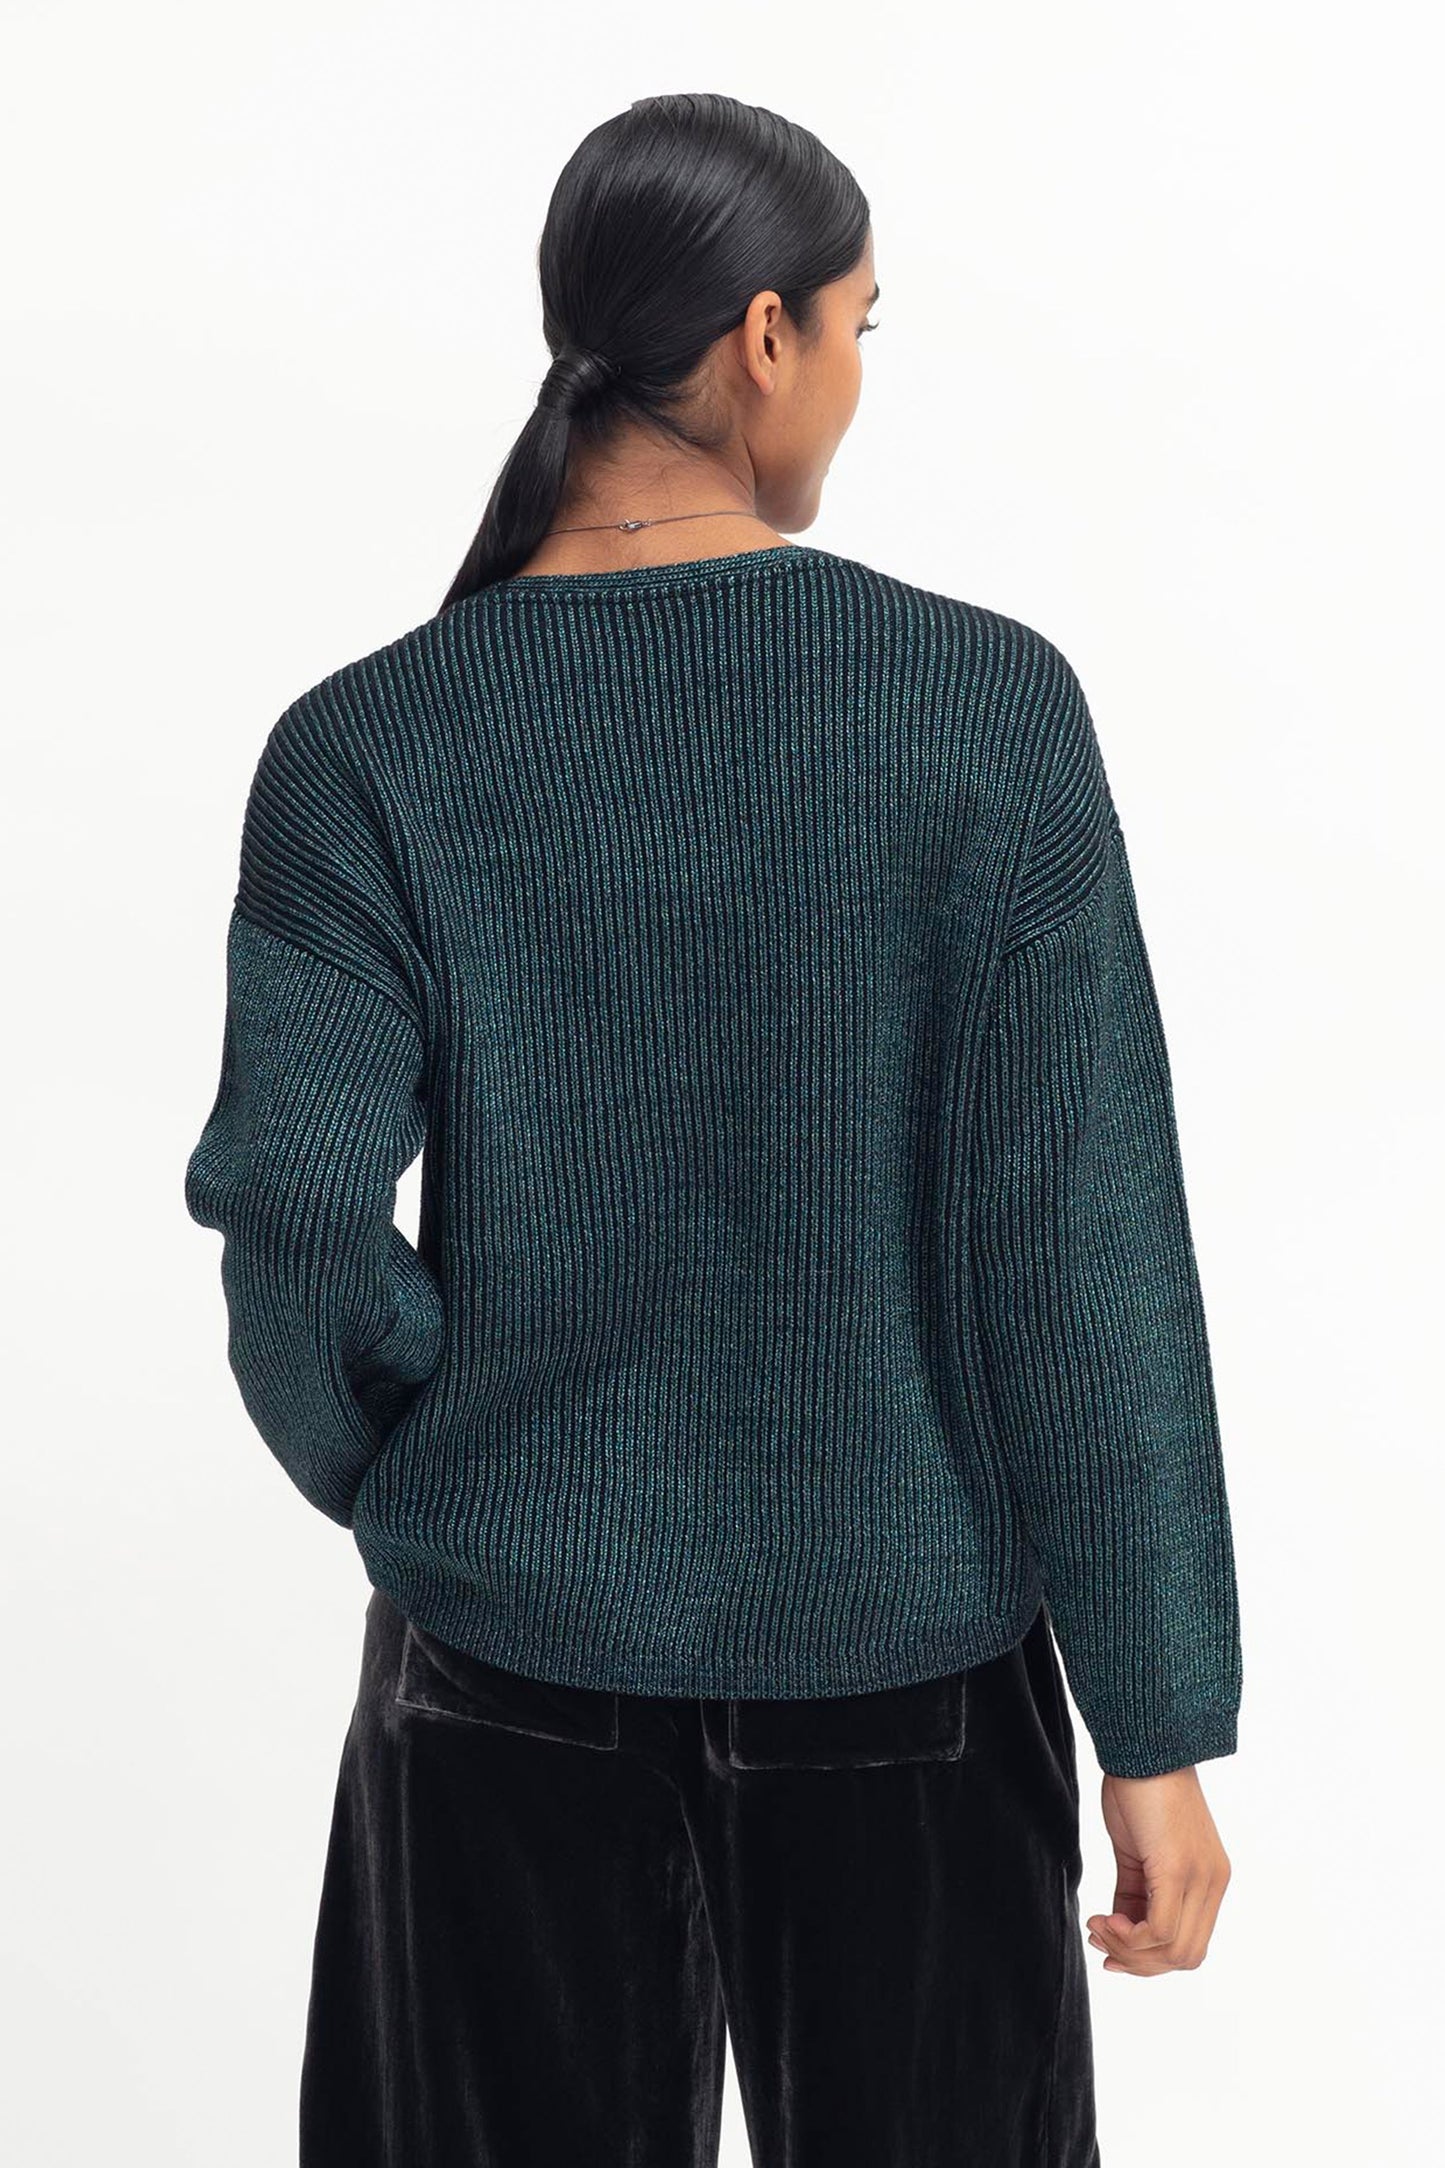 Glittra Lurex Knit Metallic Relaxed V-neck Sweater Model Back | TEAL METALLIC